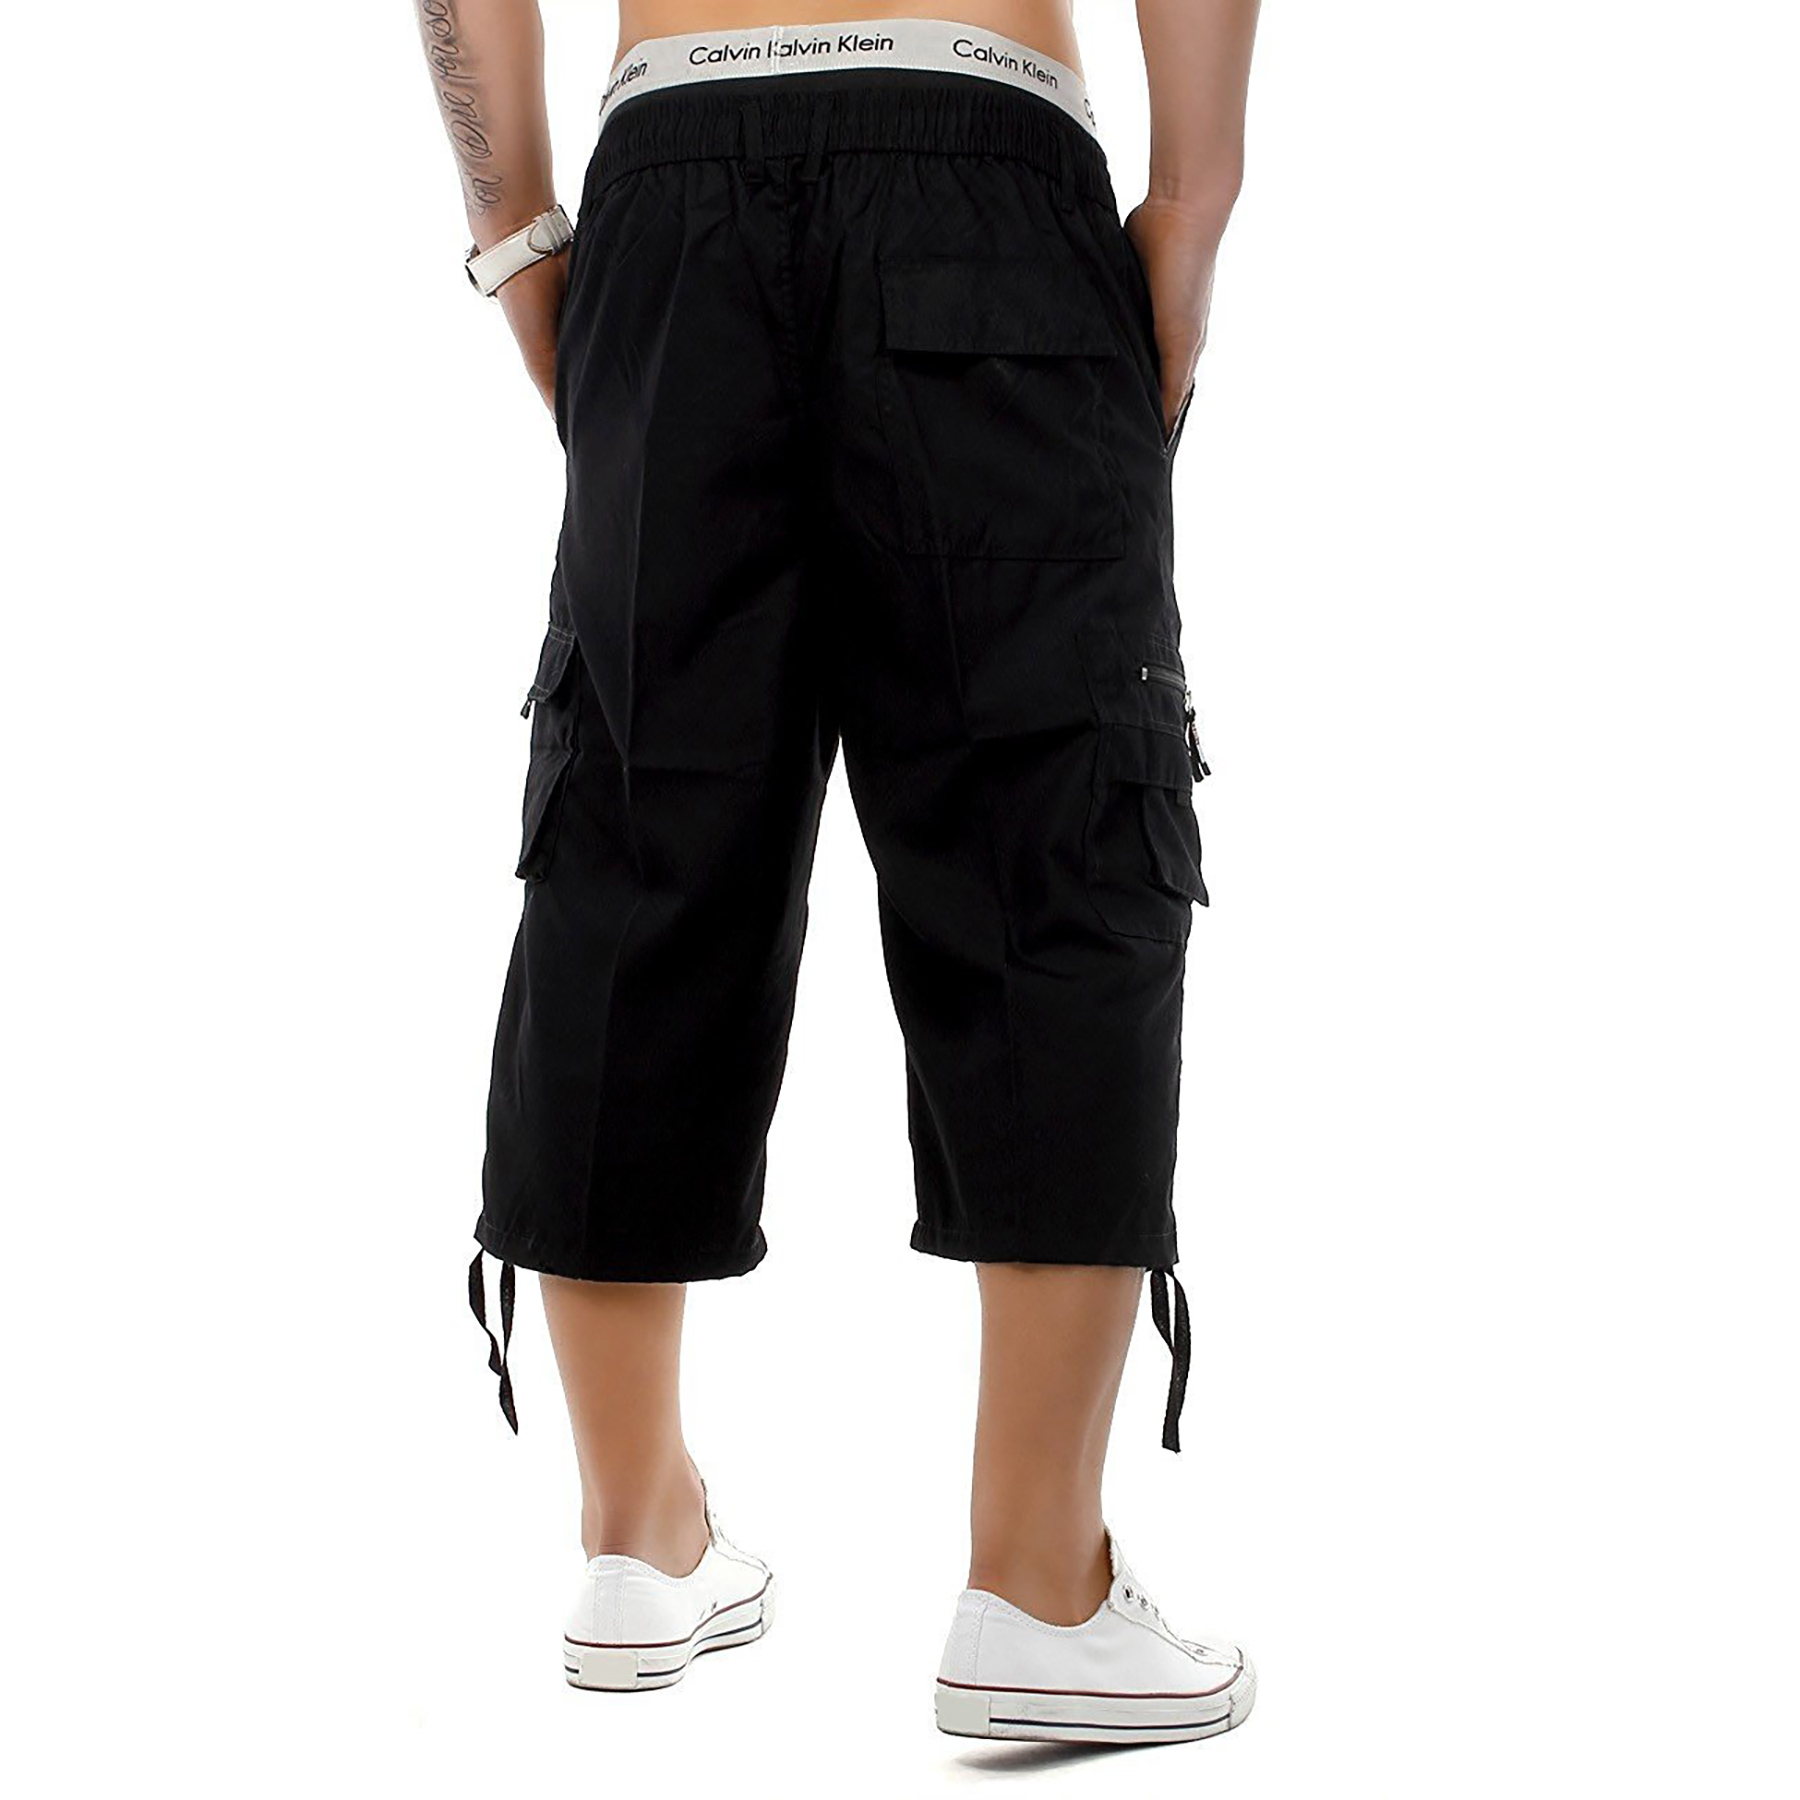 New Mens Elasticated Shorts Cargo Combat Shorts Cotton 6 Pocket 3/4 Long Pants